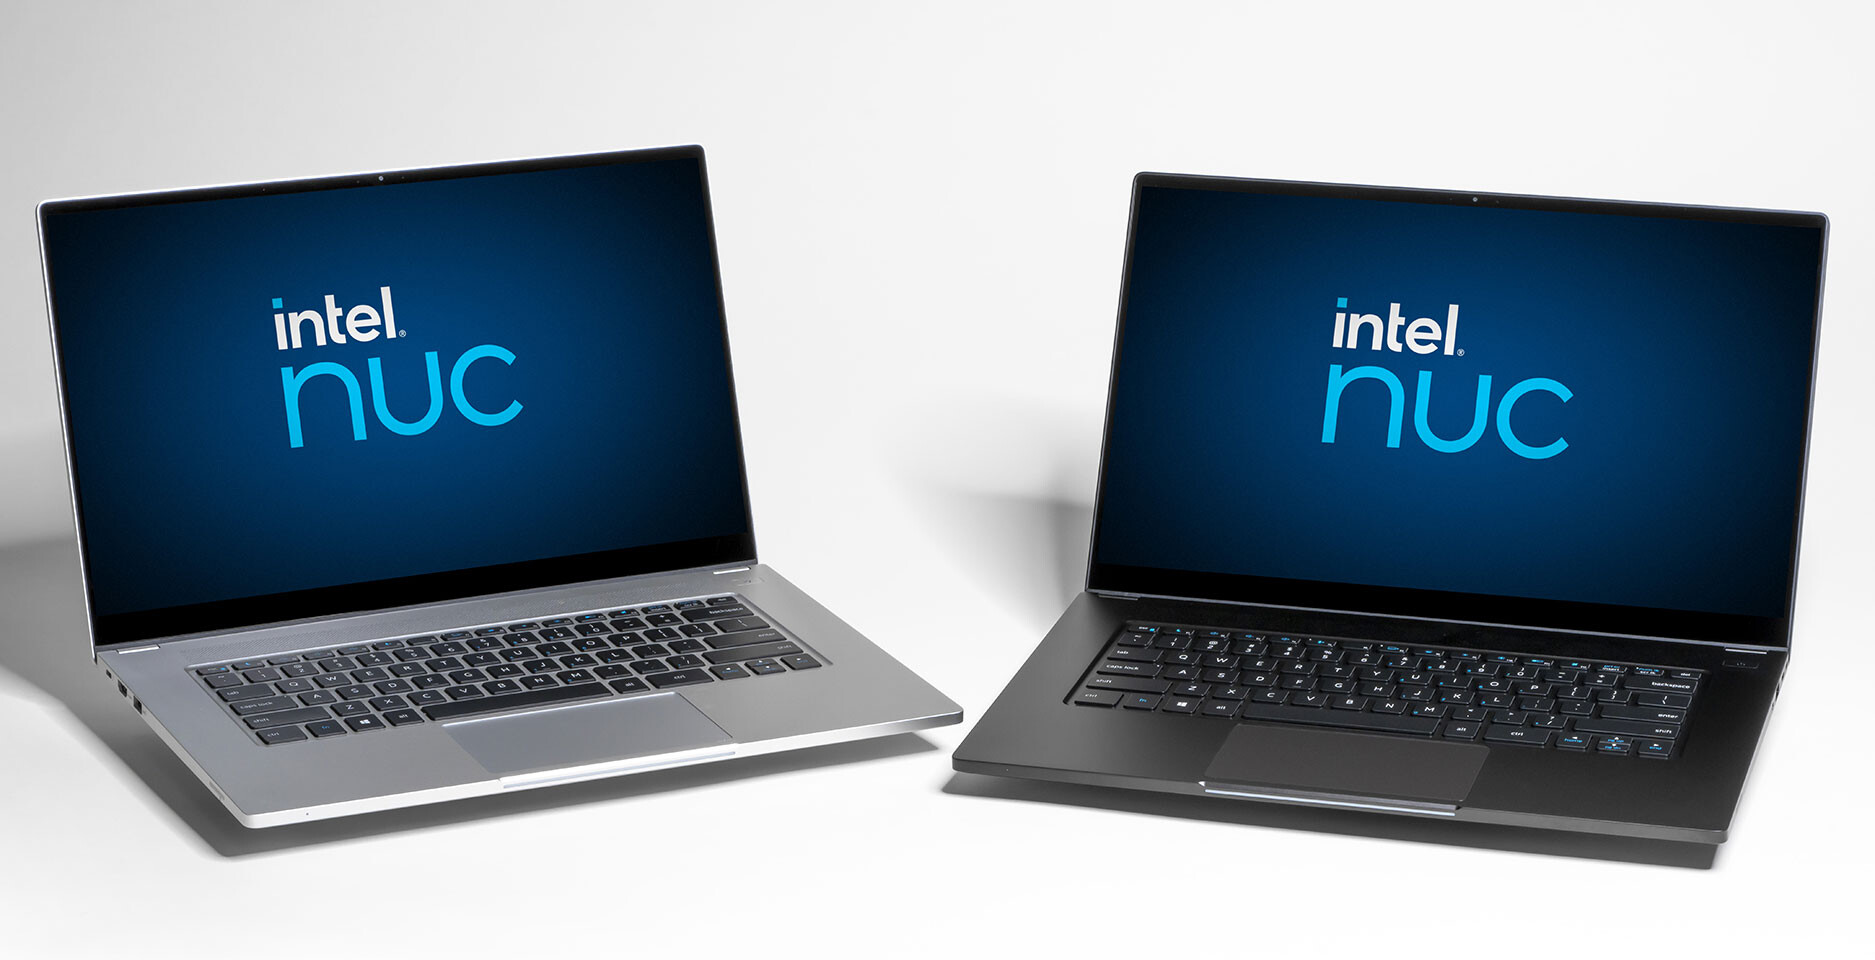 itthyo6lh25hj9ym อินเทลเปิดตัว Intel NUC M15 แล๊ปท็อปรุ่นใหม่ล่าสุด